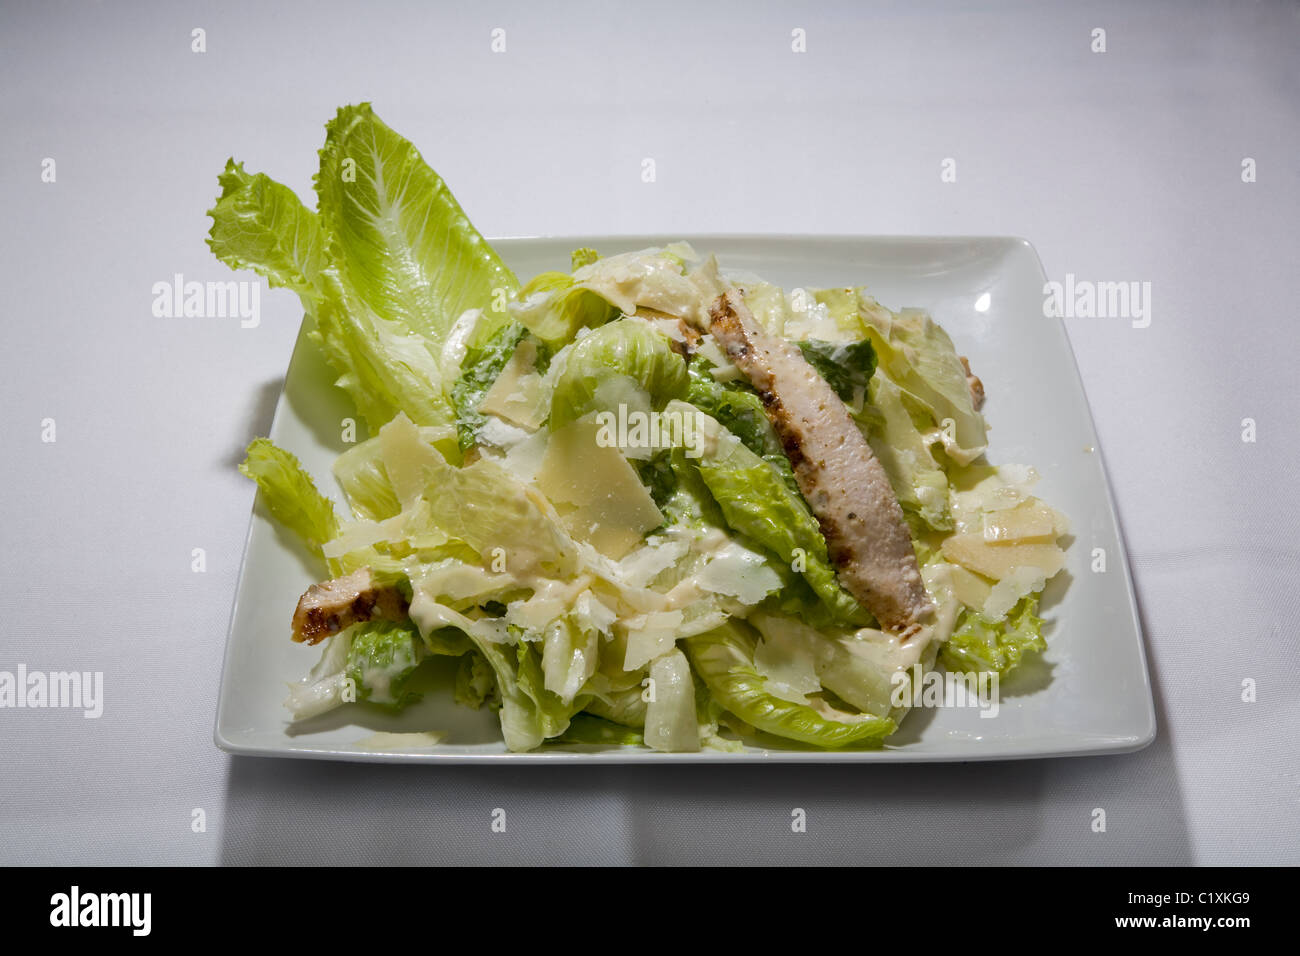 Ensalada de Pollo lechuga verde plaza vegetal placa blanca comida ligera cocina mediterránea mantel aderezo ligero apetito mea Foto de stock